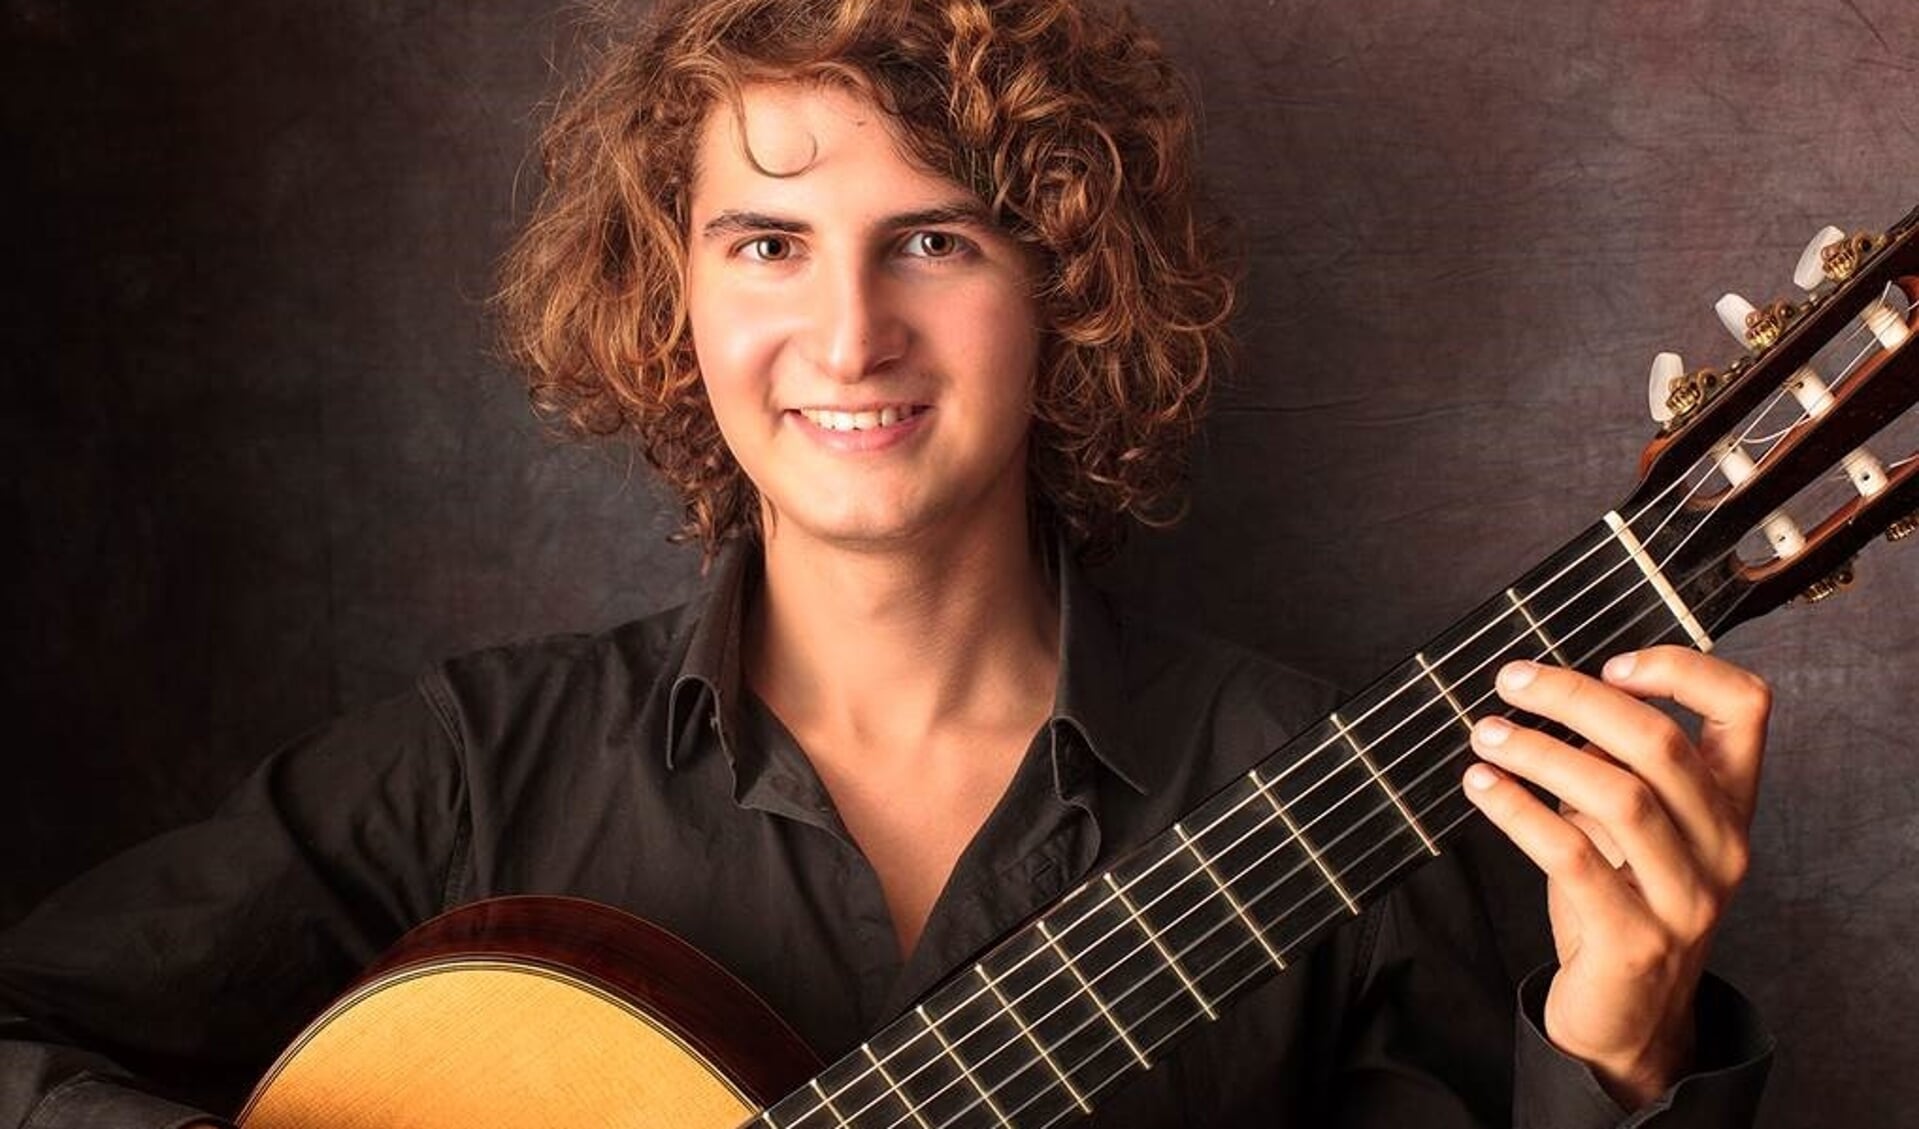 De talentvolle gitarist Silvan Smit speelt in 't Brakenkerkje.